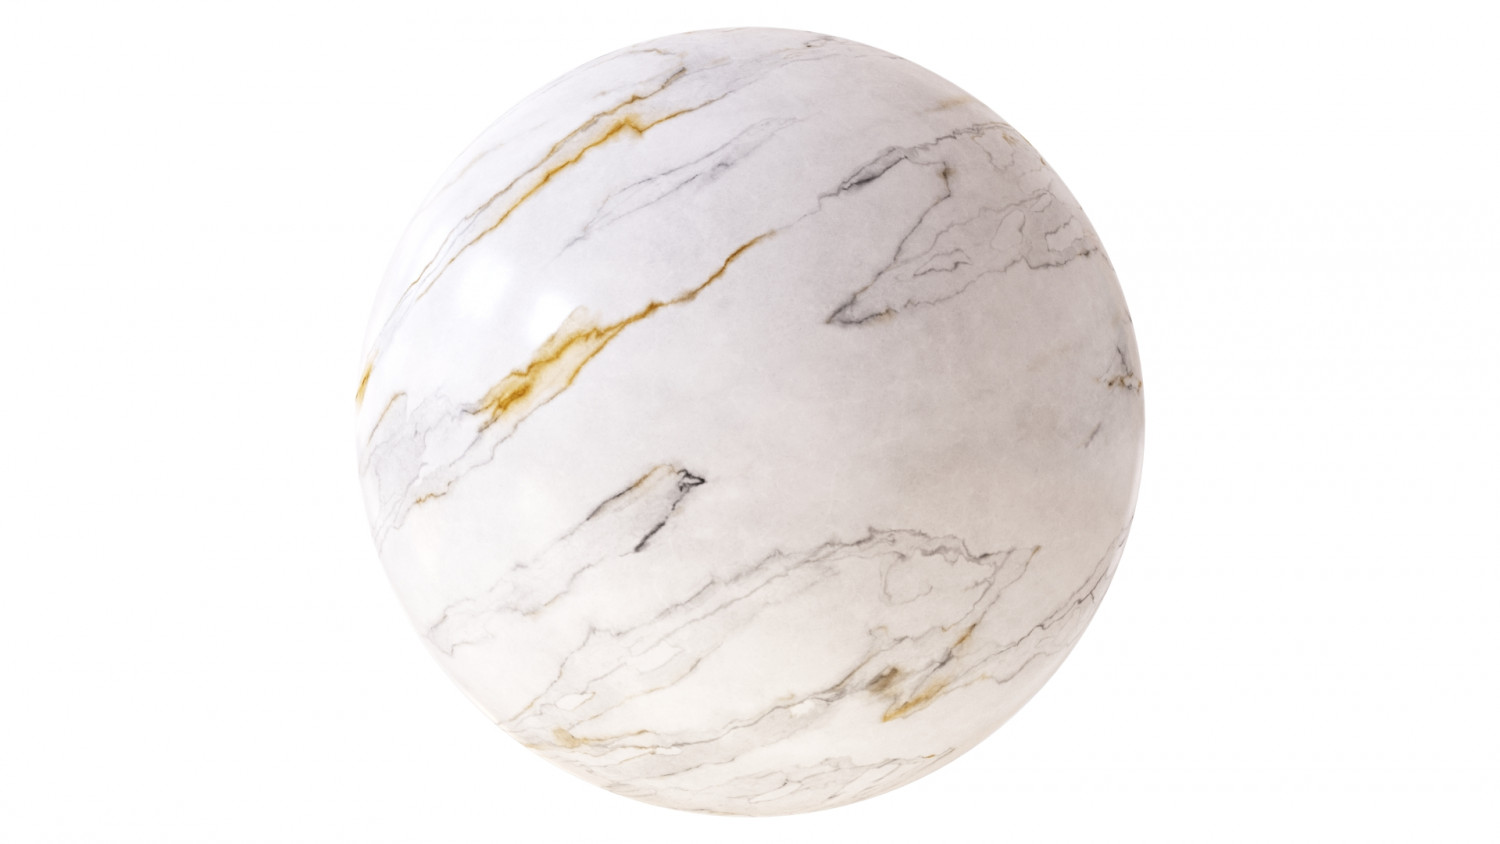 White marble texture